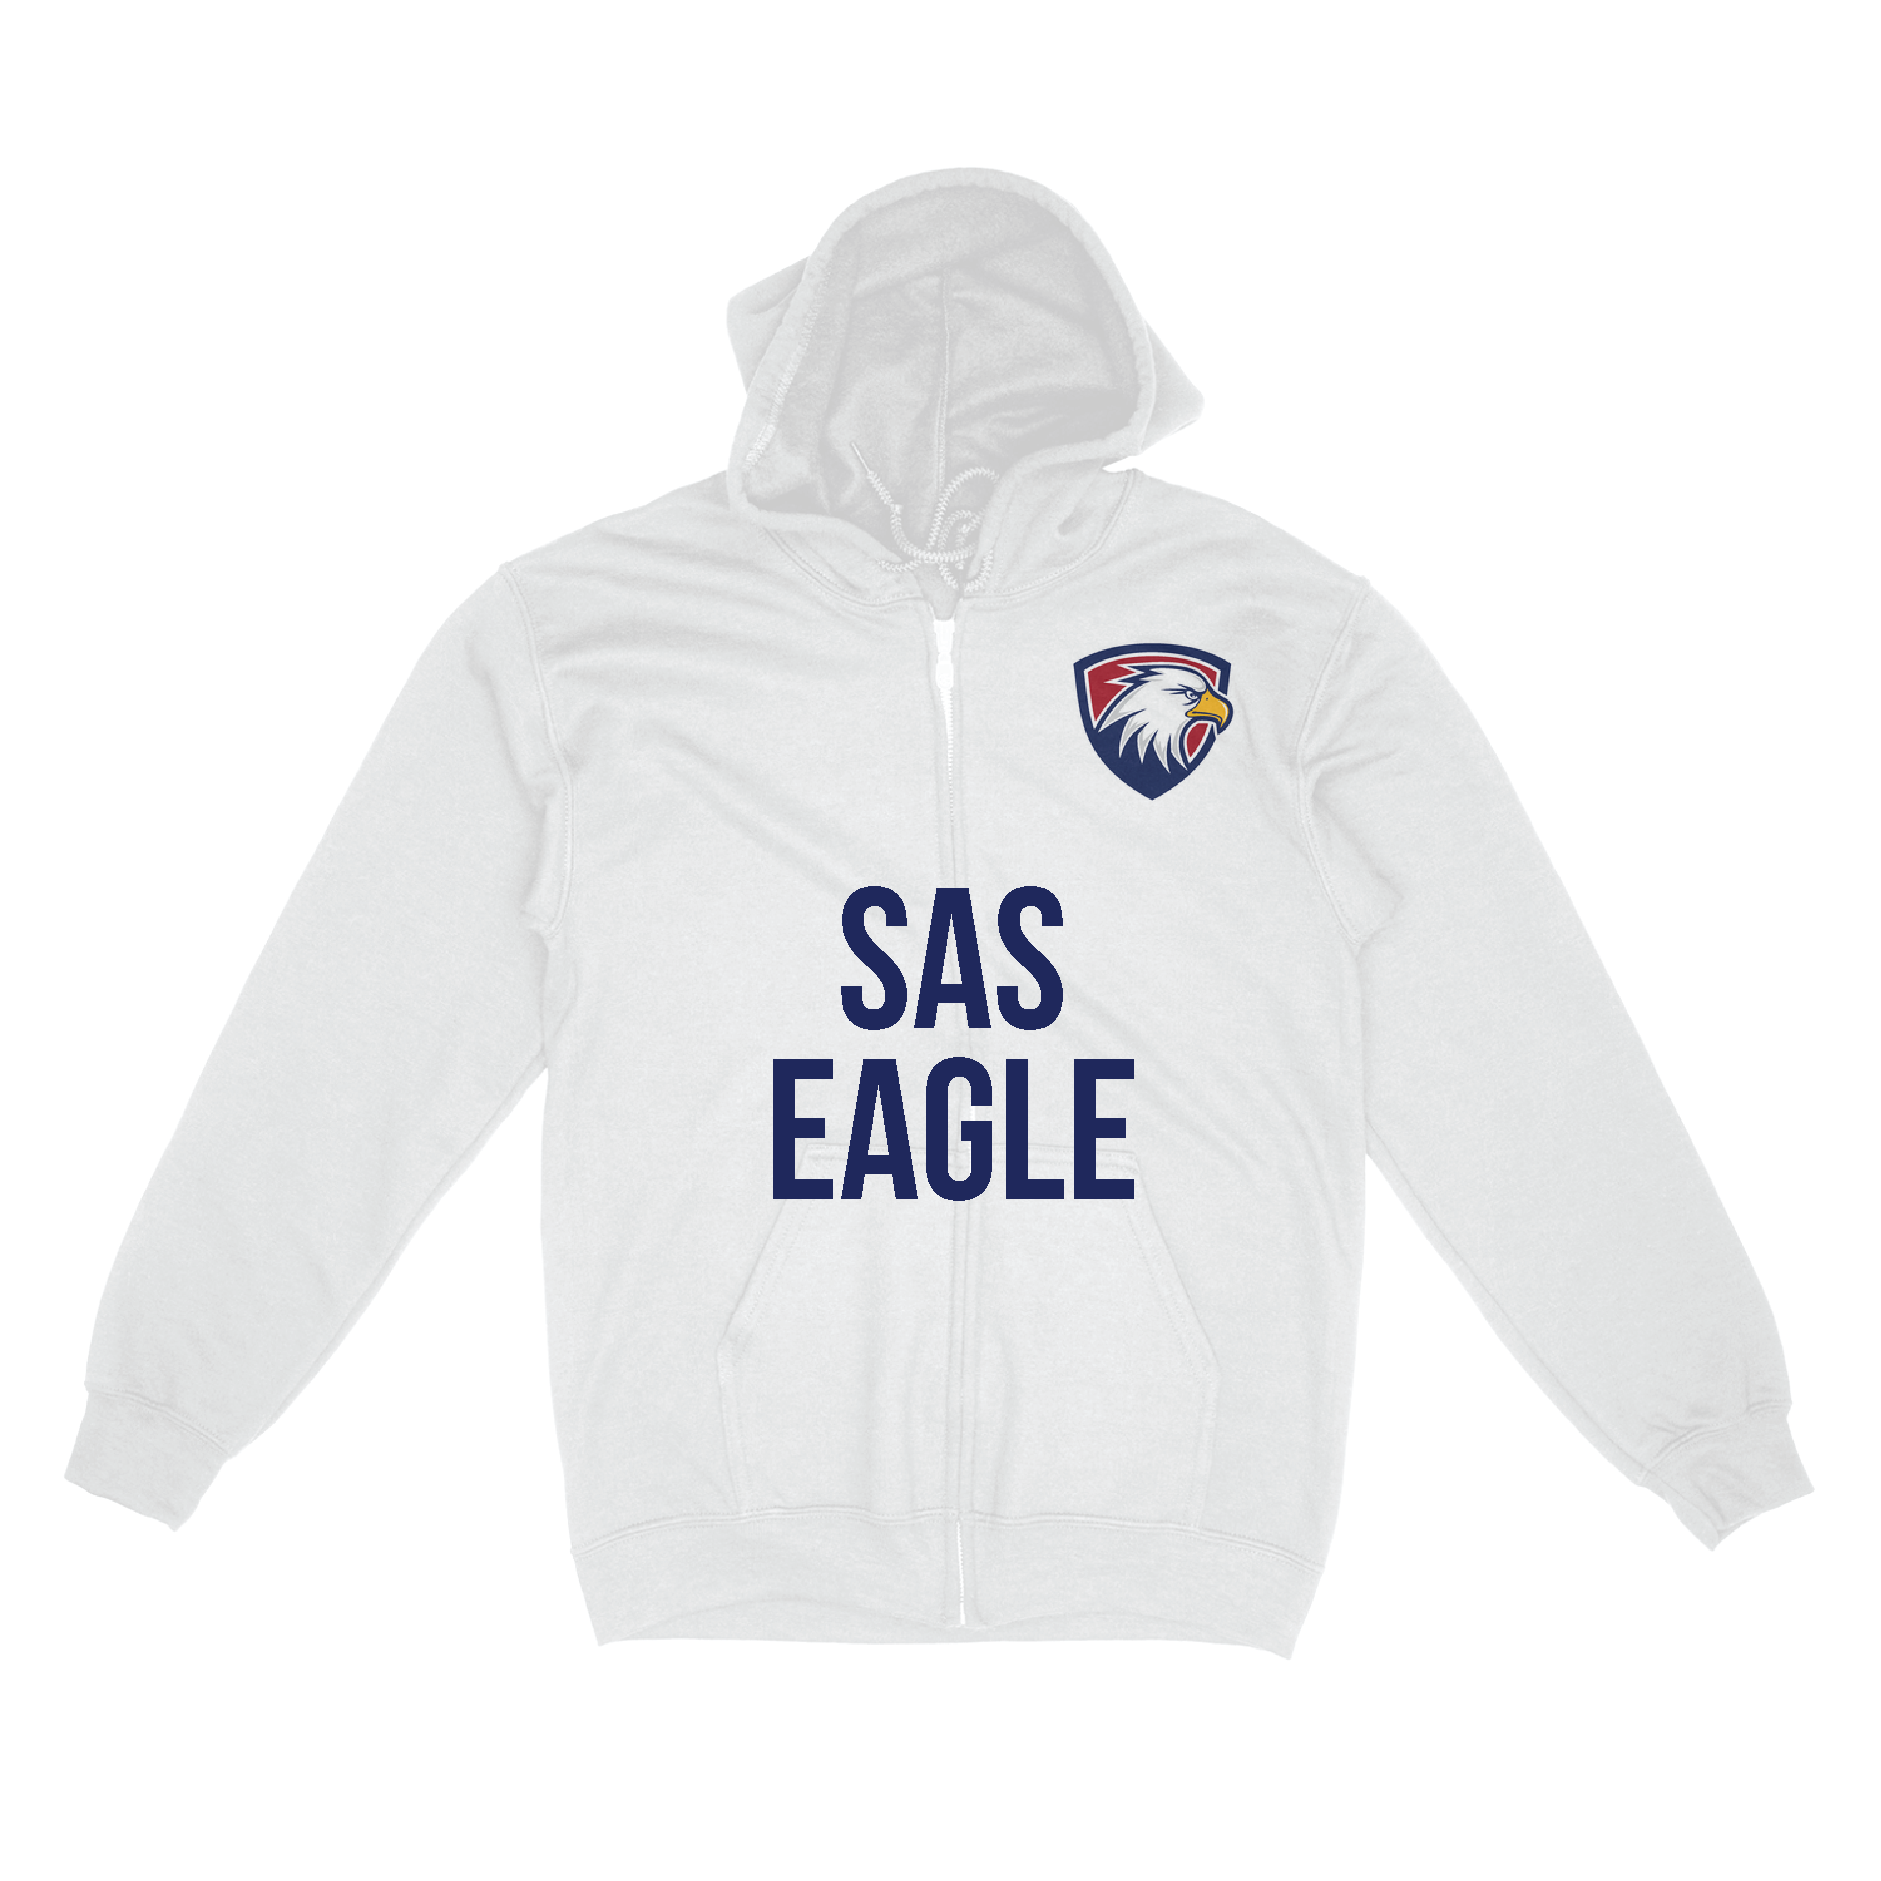 Westcoast Eagles Sweatshirts & Hoodies for Sale